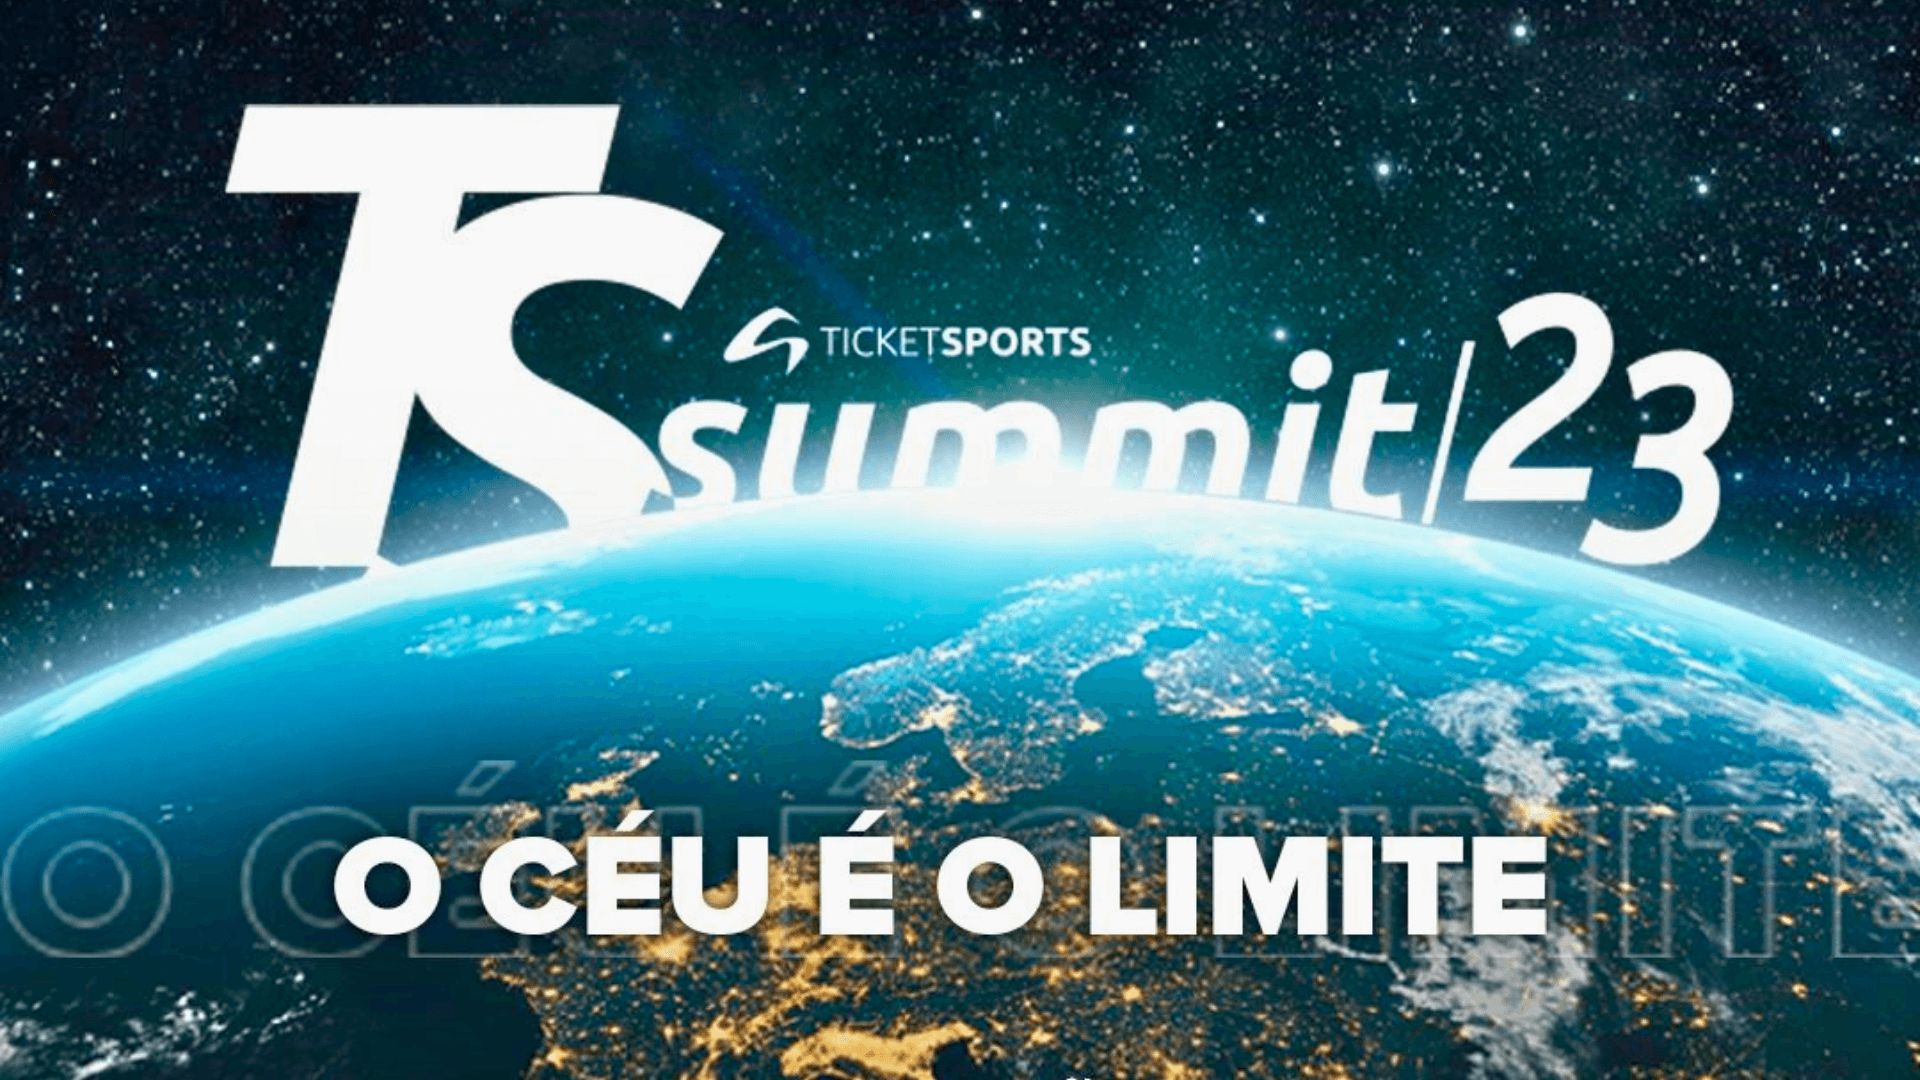 Ticket Sports realiza 3º TS Summit para fomentar o mercado de eventos esportivos